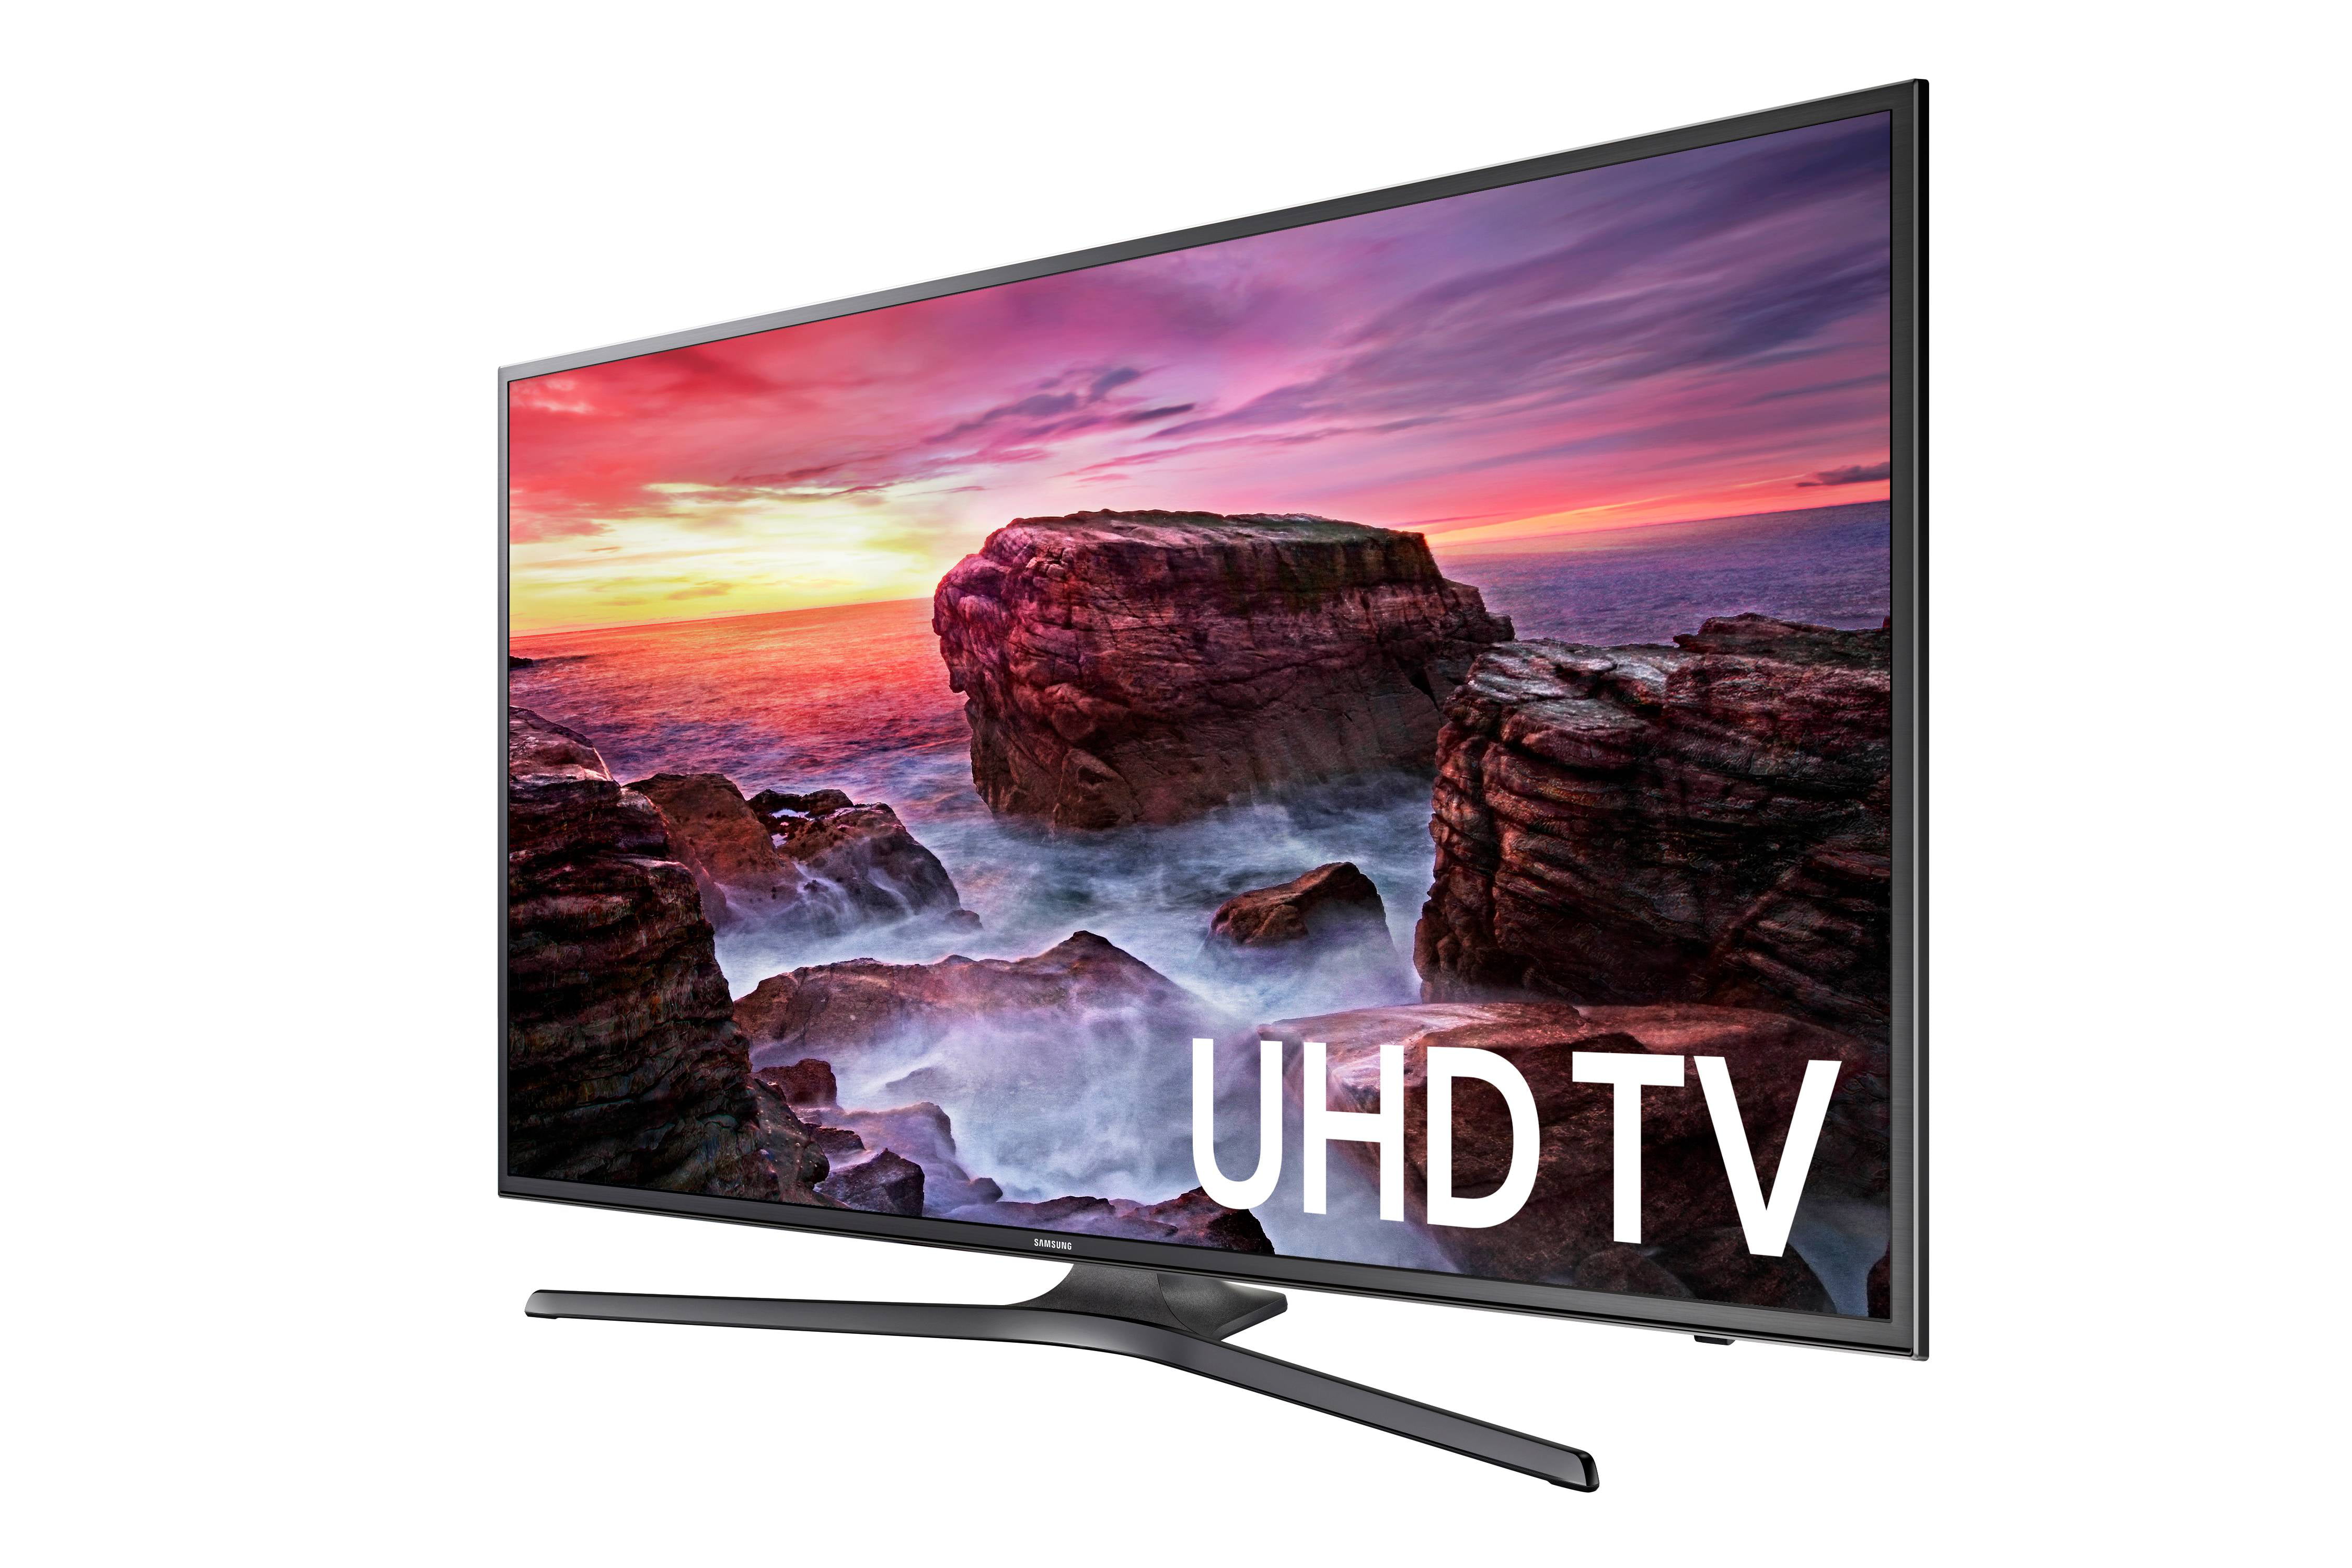 Permanecer Abandonado recuperar SAMSUNG 55" Class 4K (2160P) Ultra HD Smart LED TV (UN55MU6300FXZA) -  Walmart.com